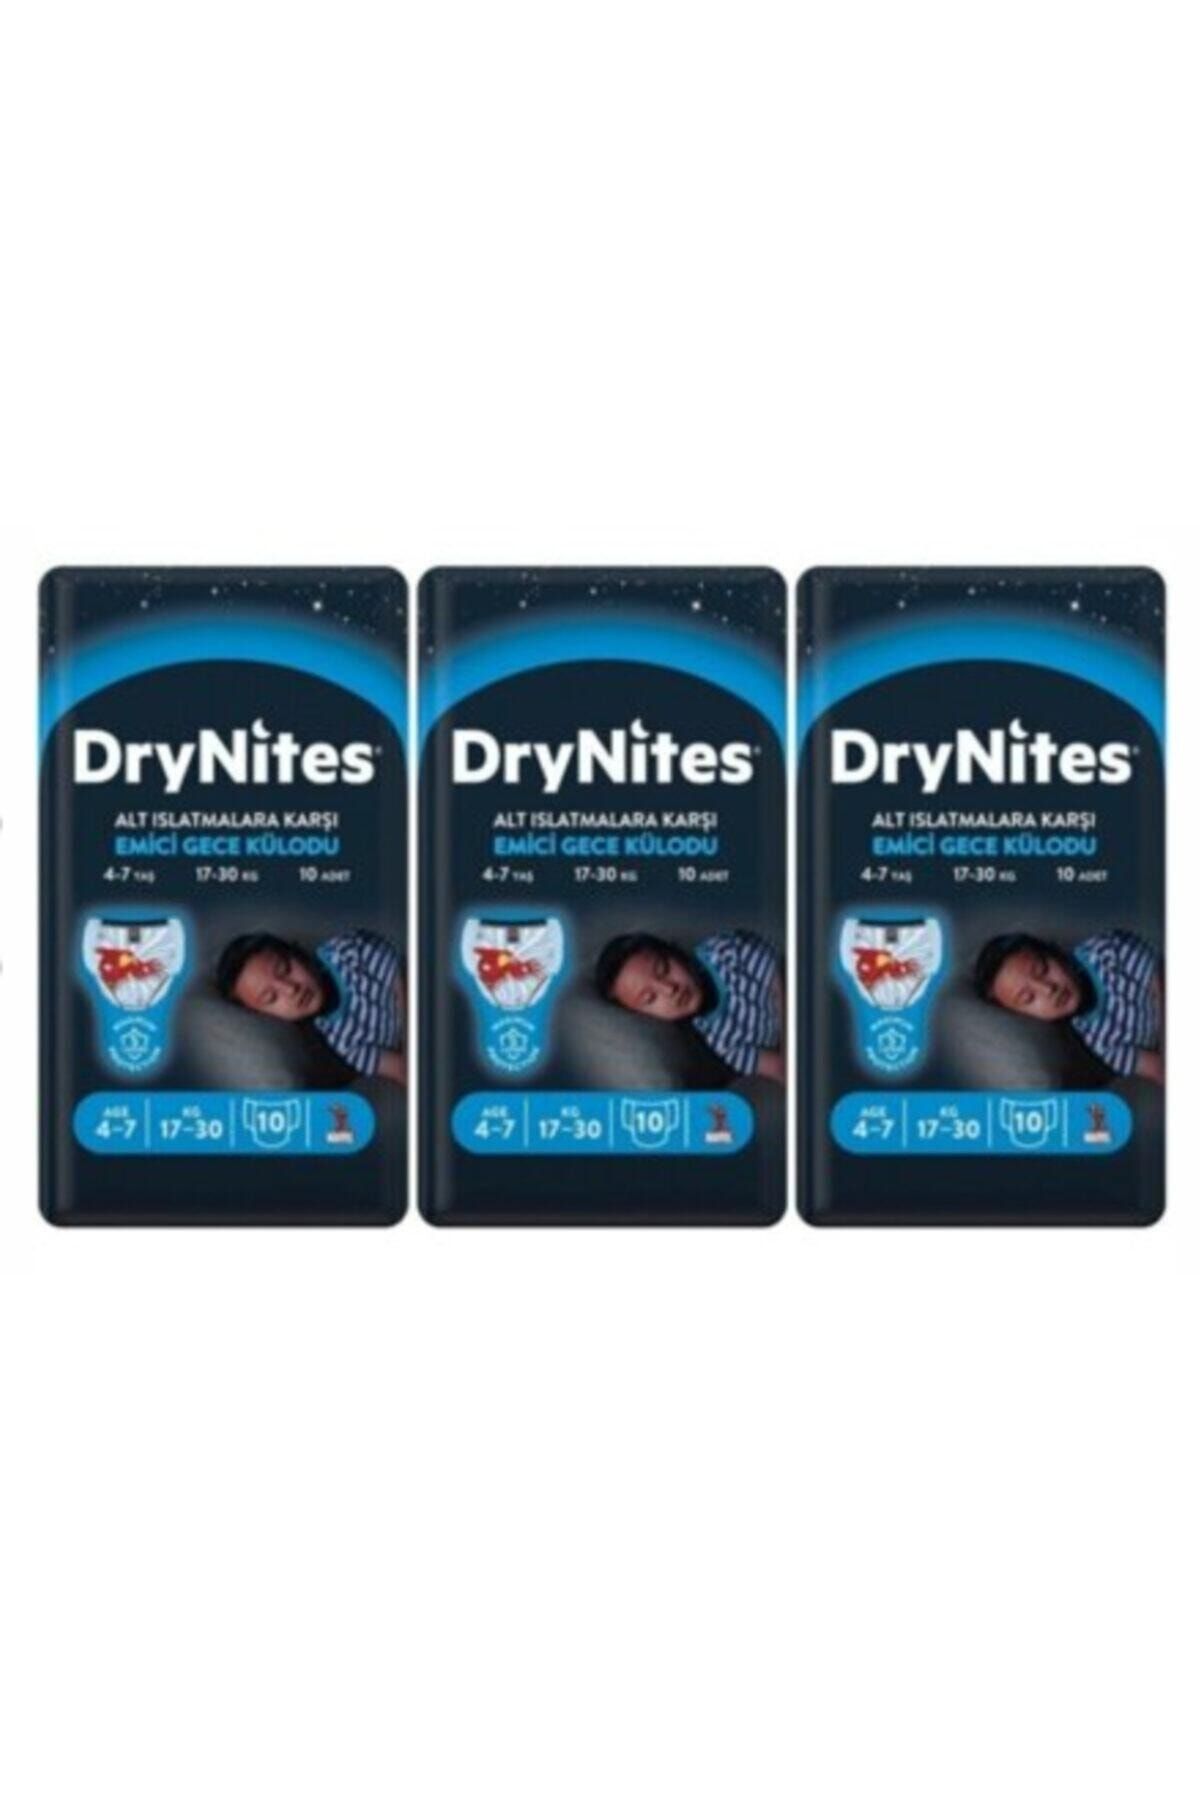 DryNites Erkek Emici Gece Külodu 4-7 Yaş 17-30 Kg 10lu 3 Paket